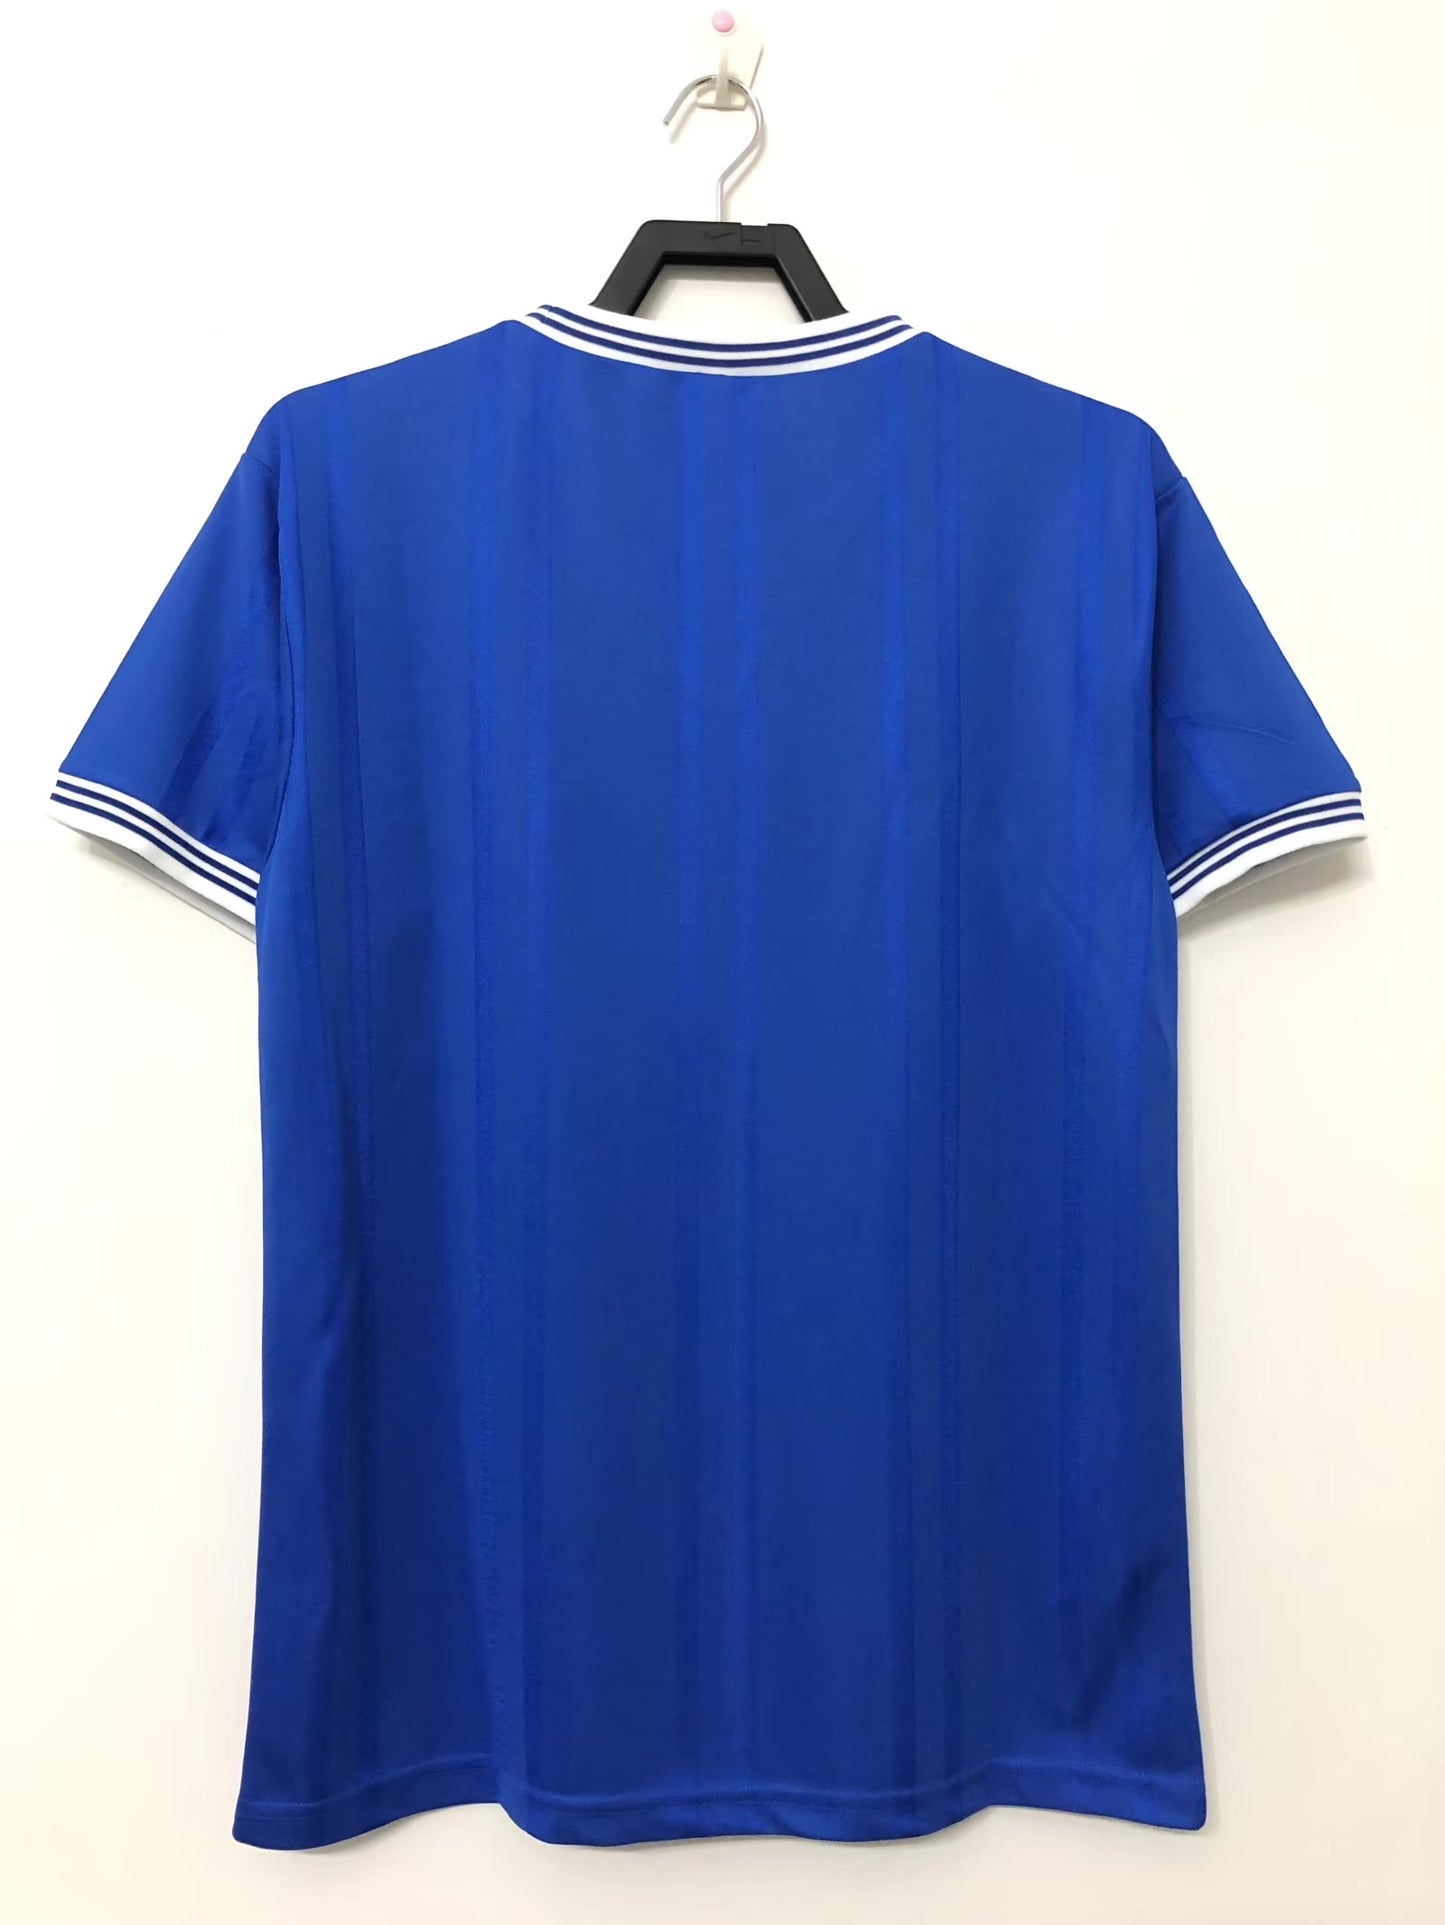 Everton 83-85 Home Shirt